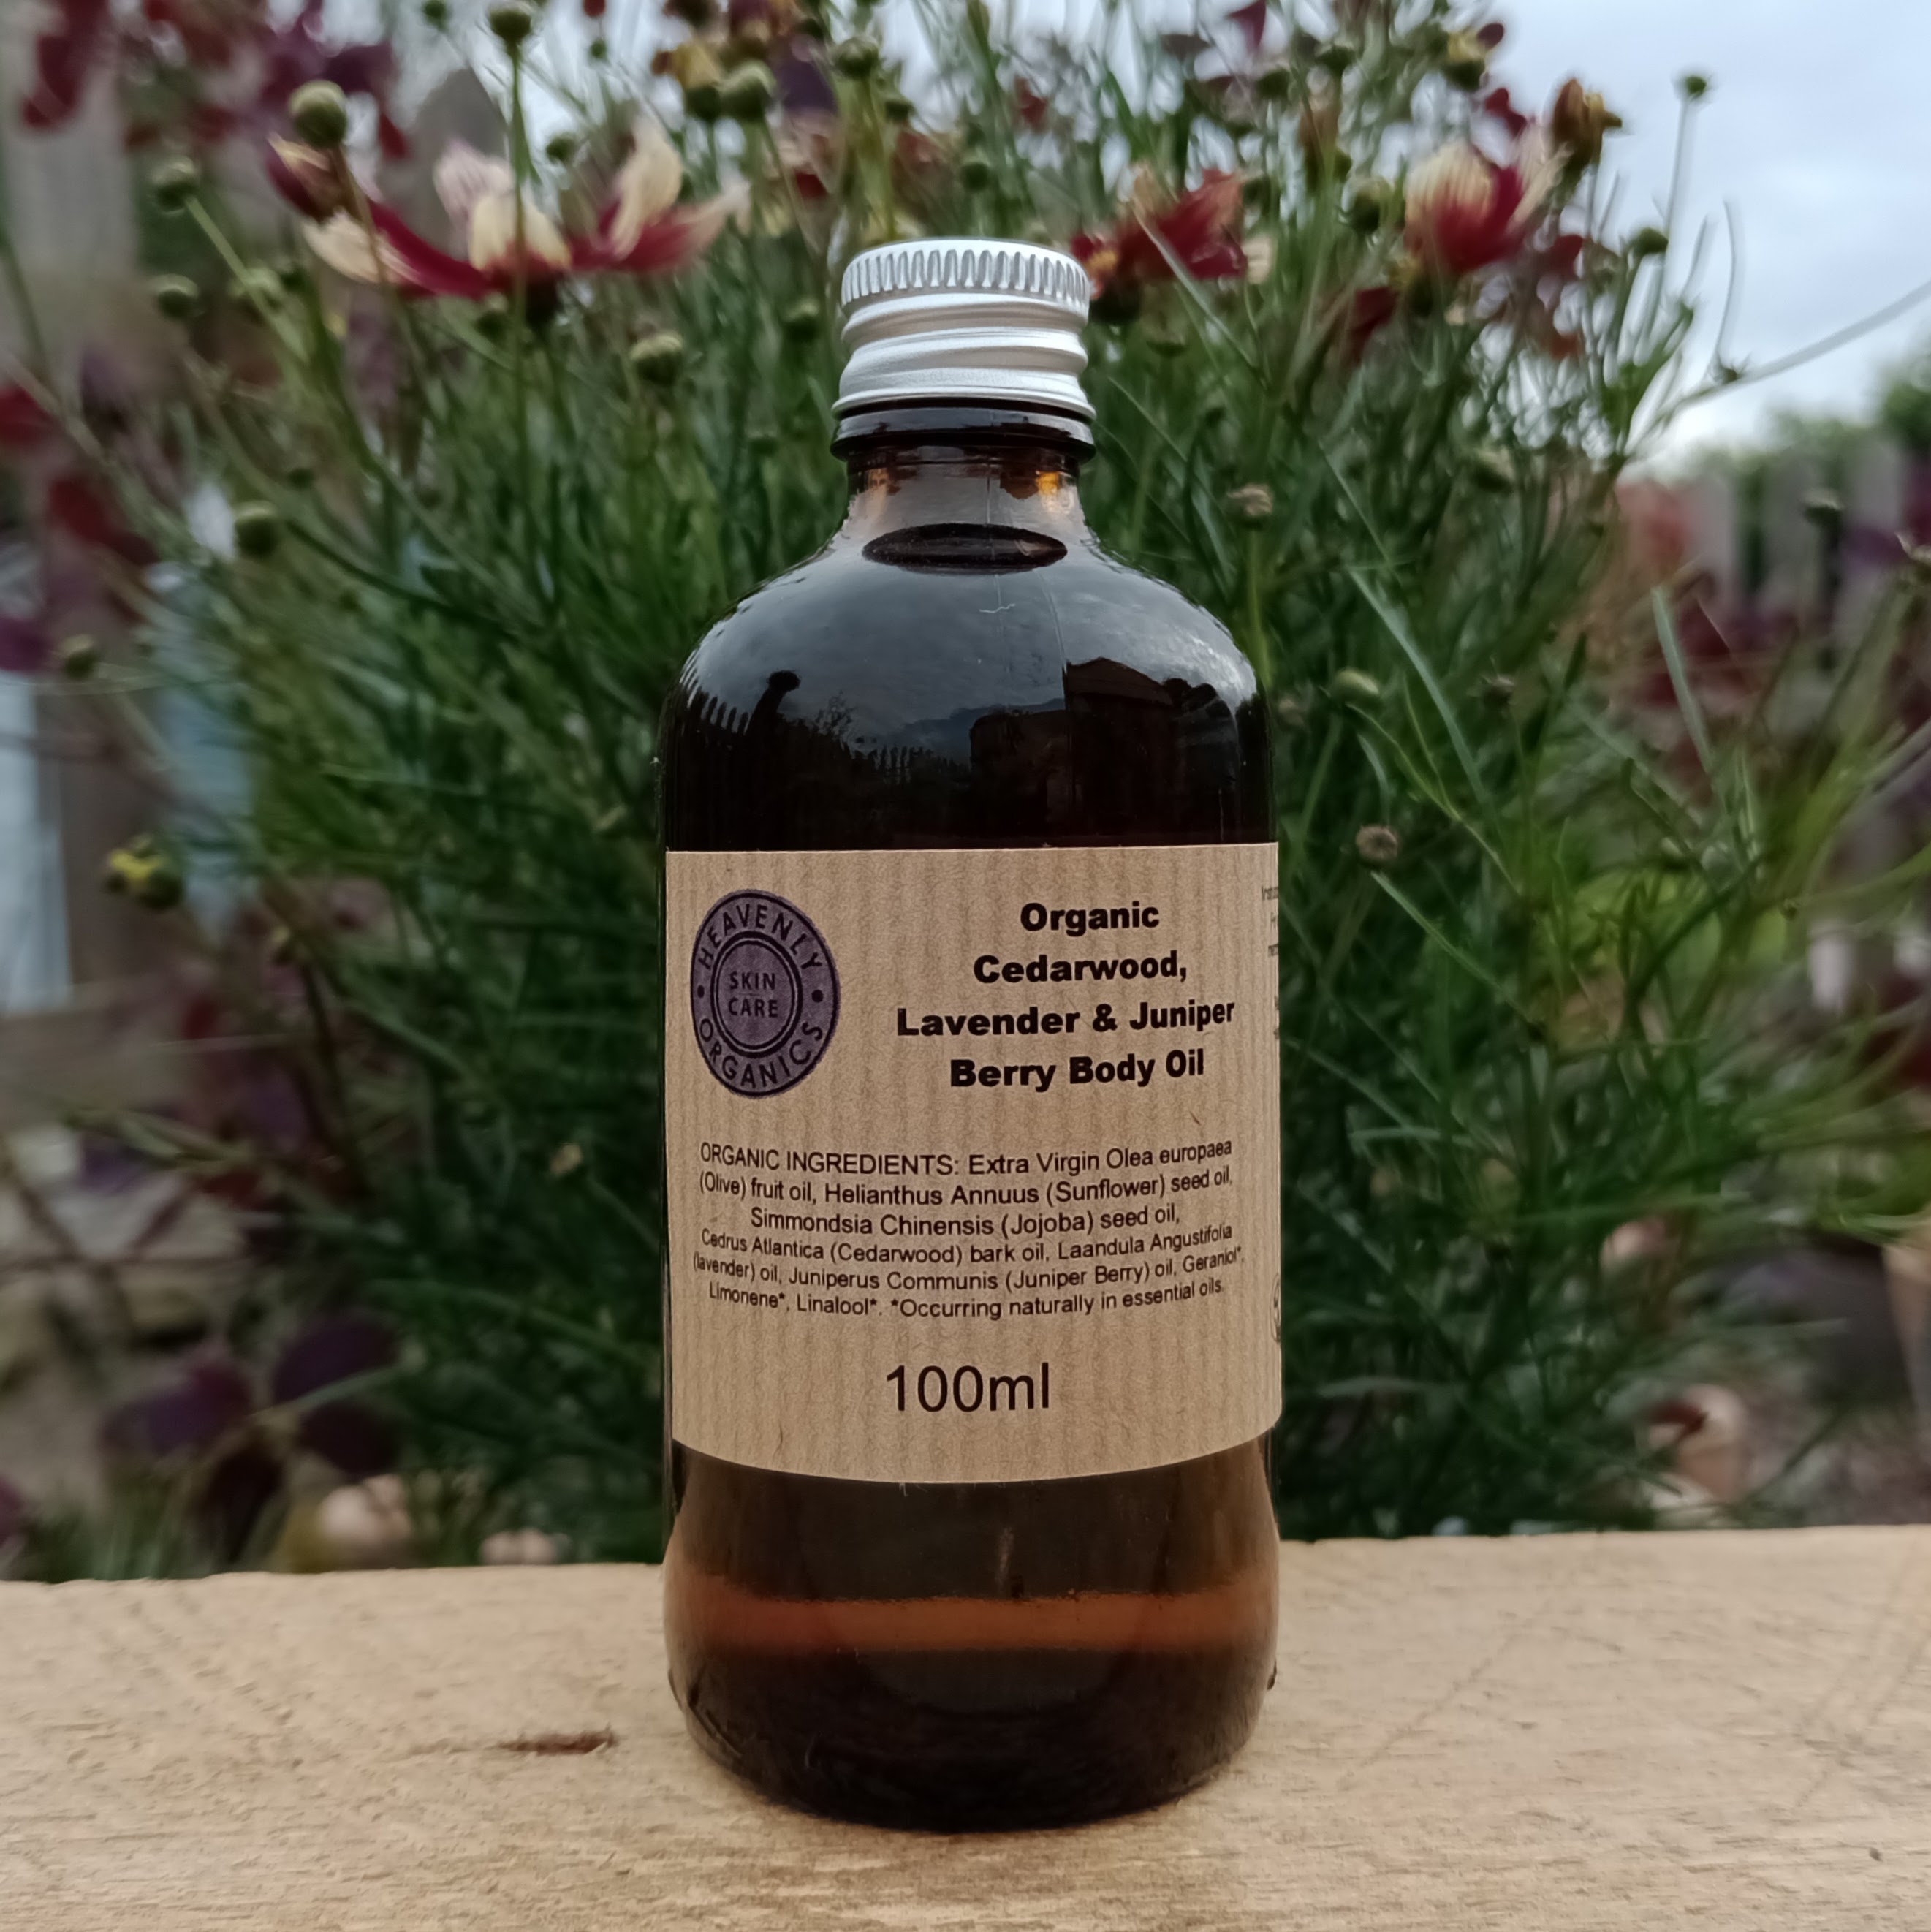 Organic Cedarwood, Lavender & Juniper Berry Body Oil